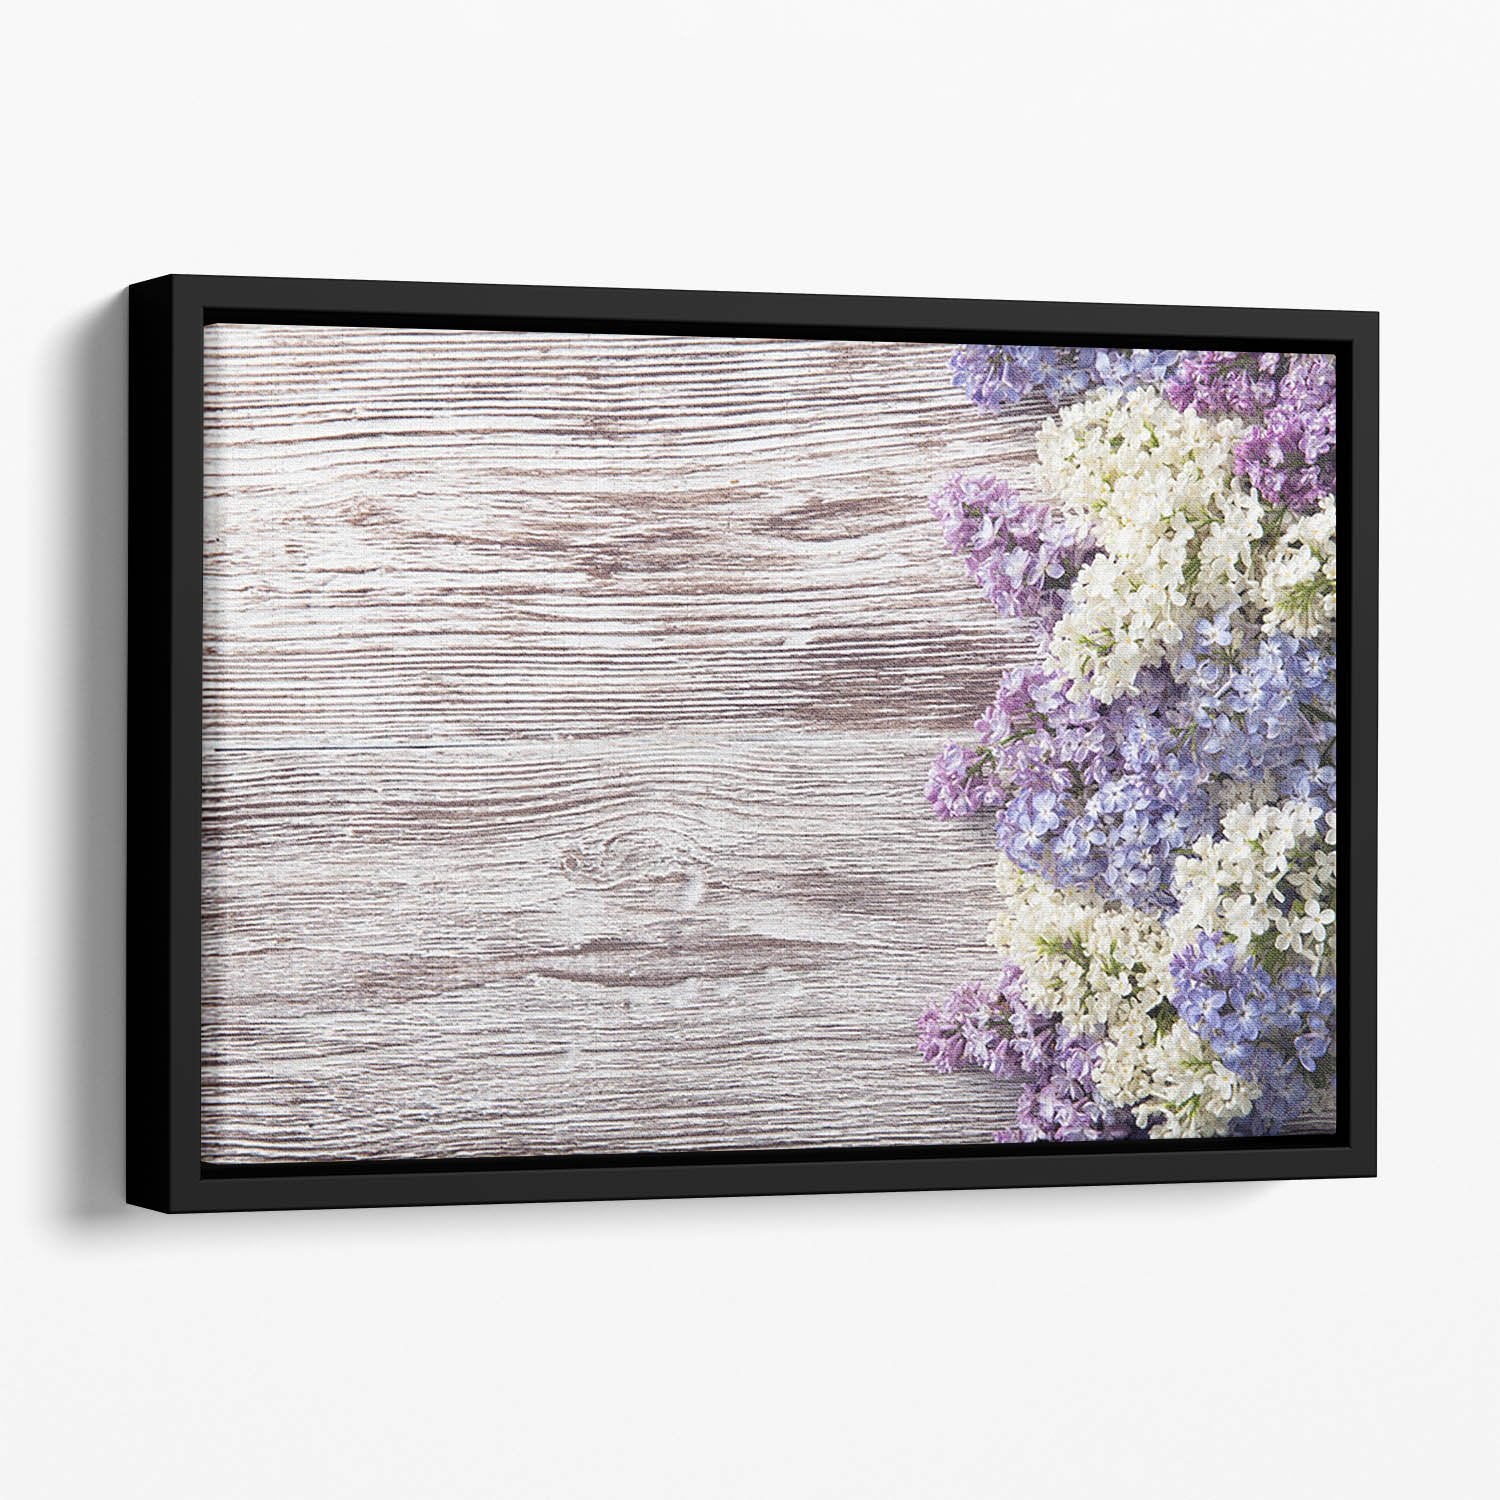 Blossom branch on wooden Floating Framed Canvas